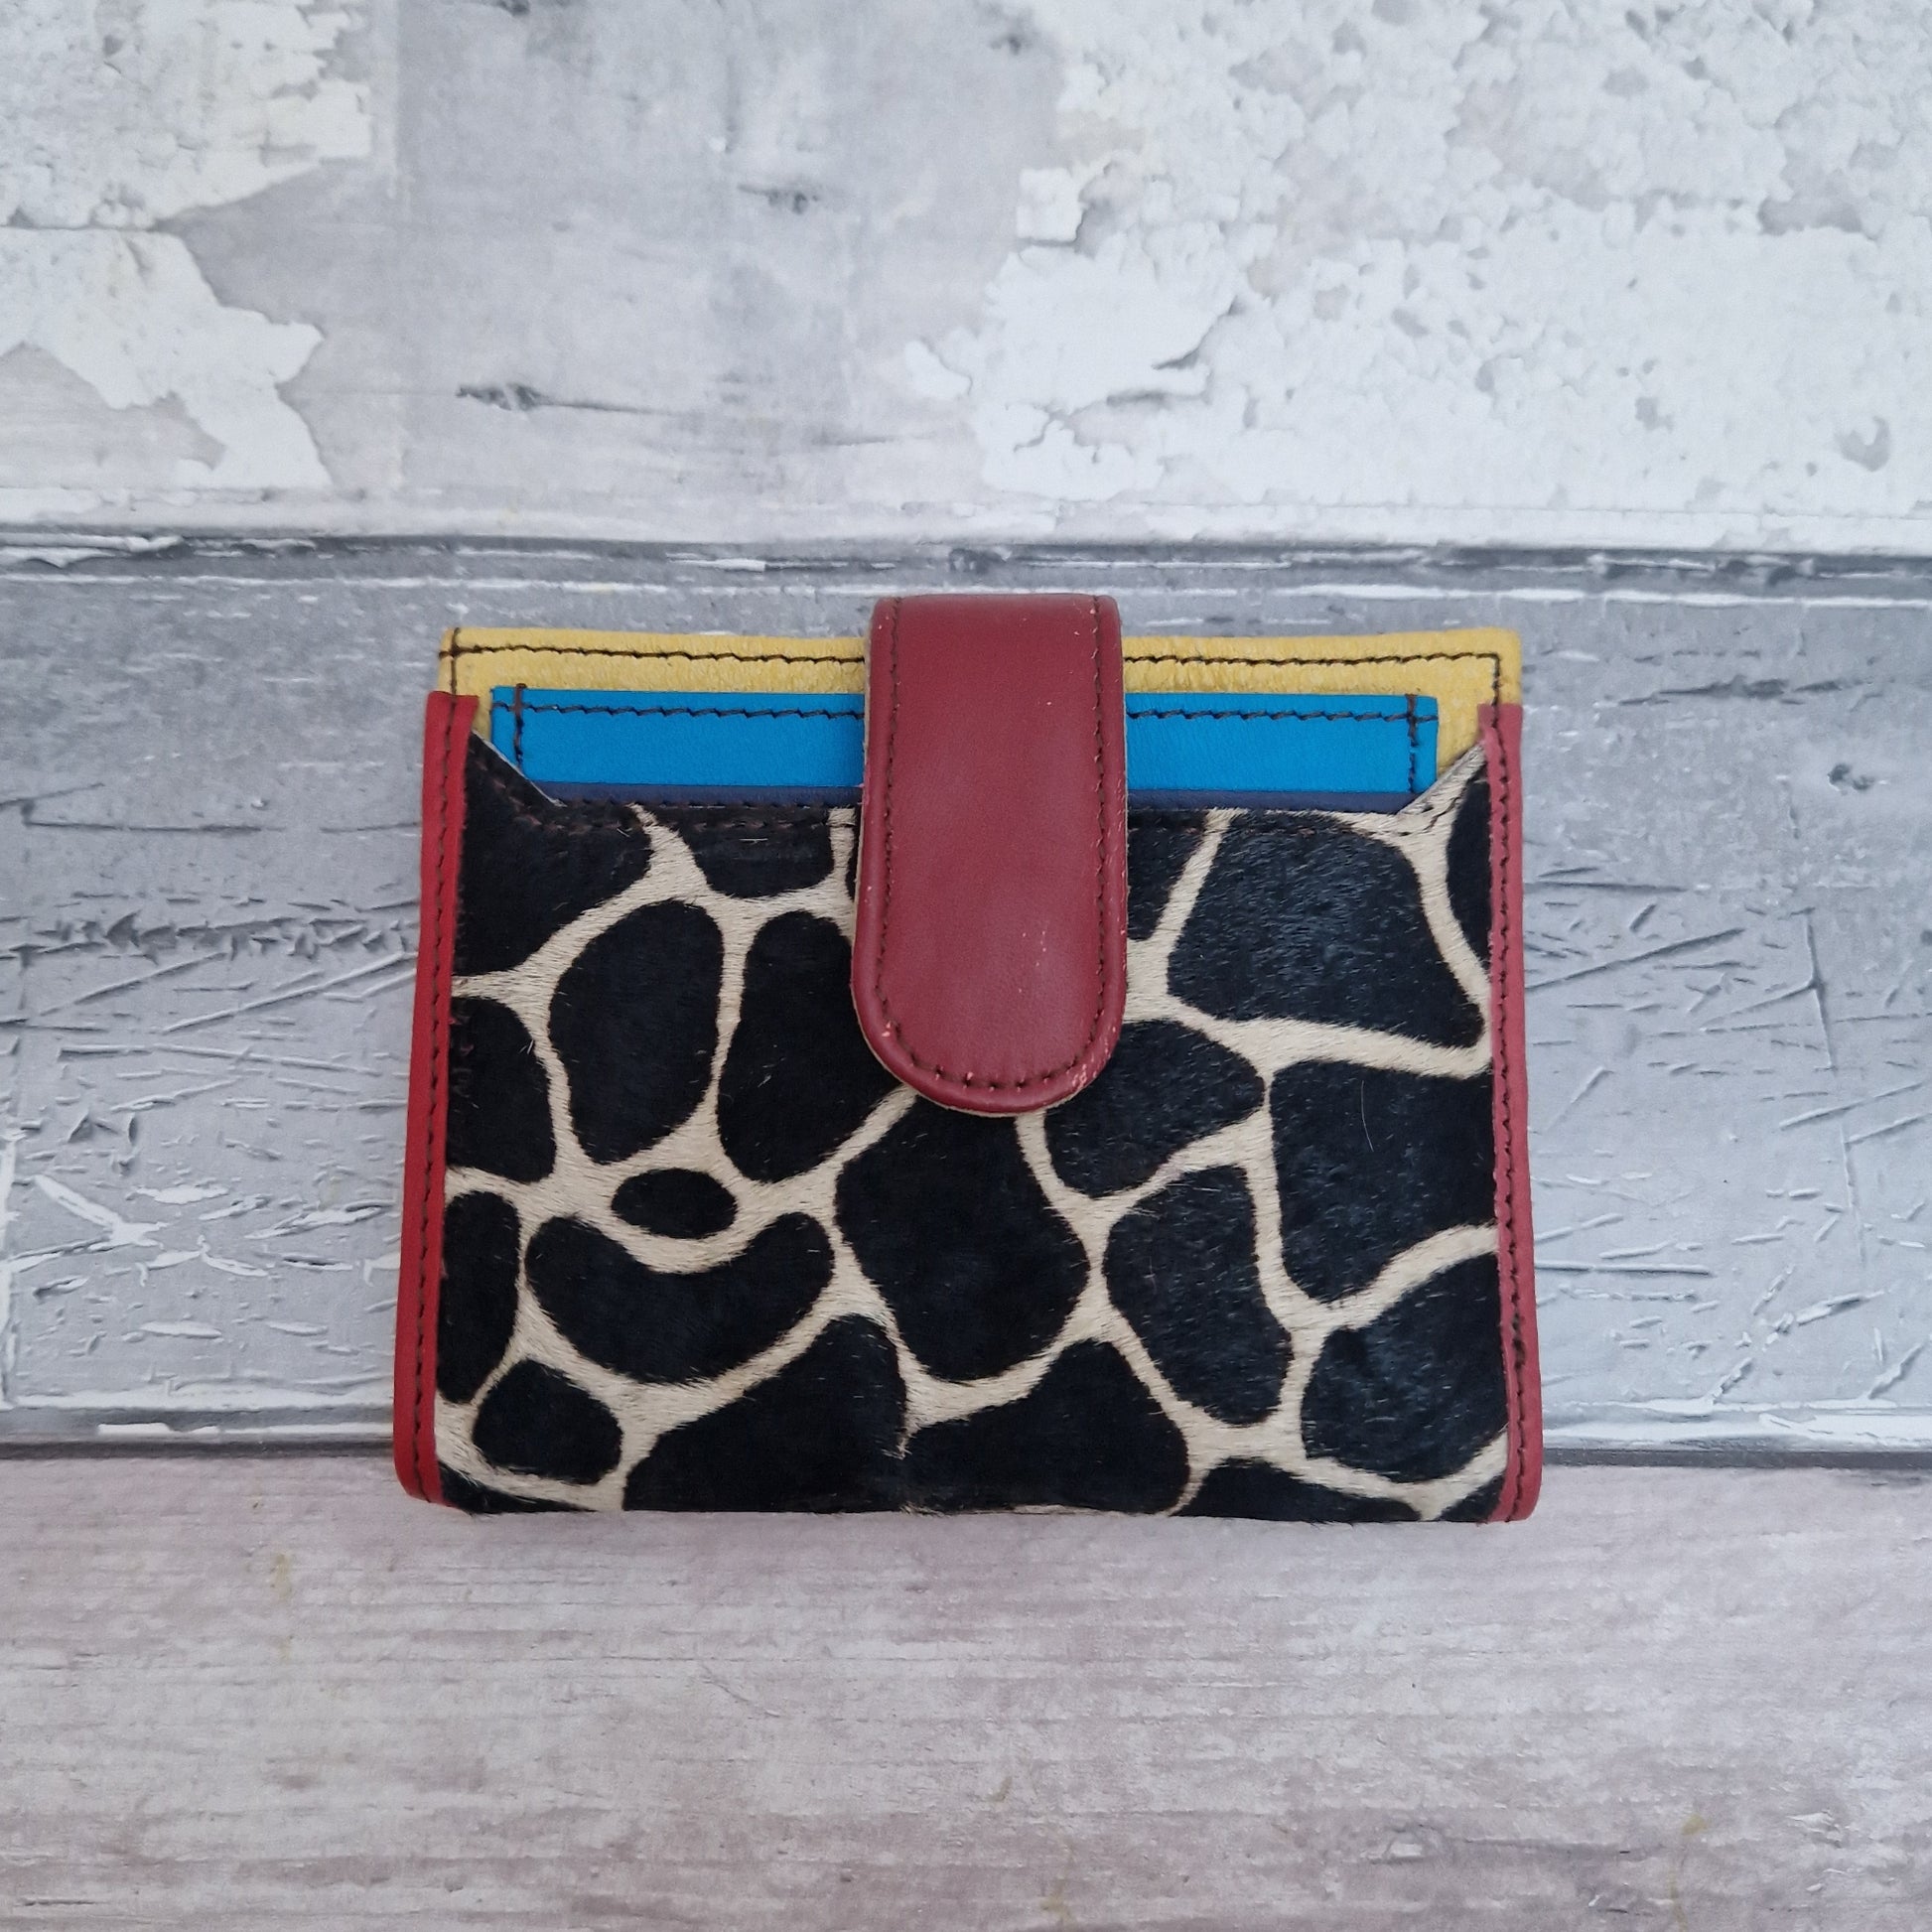 Giraffe print card wallet in a textured finish.